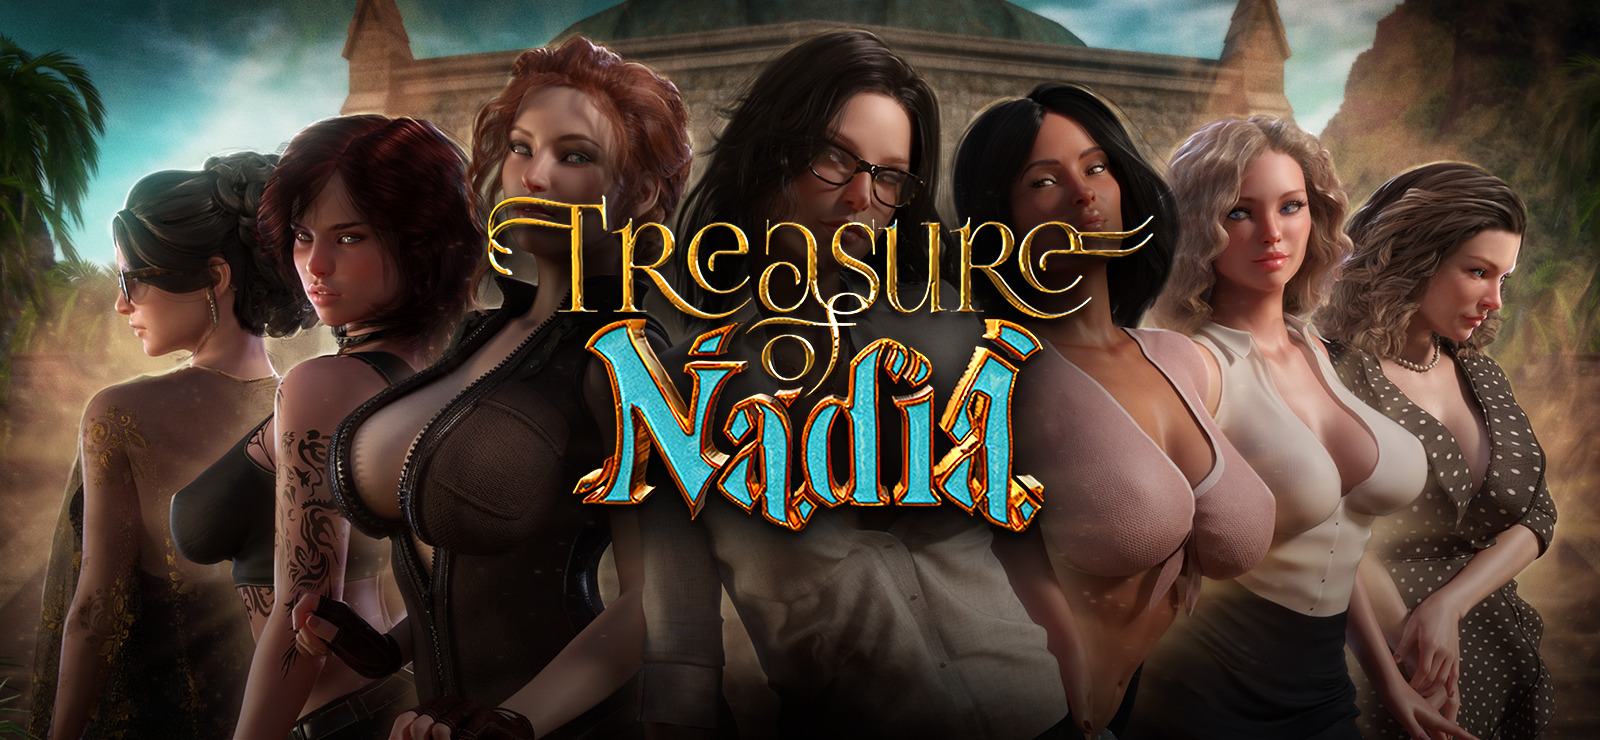 The treasure of nadia